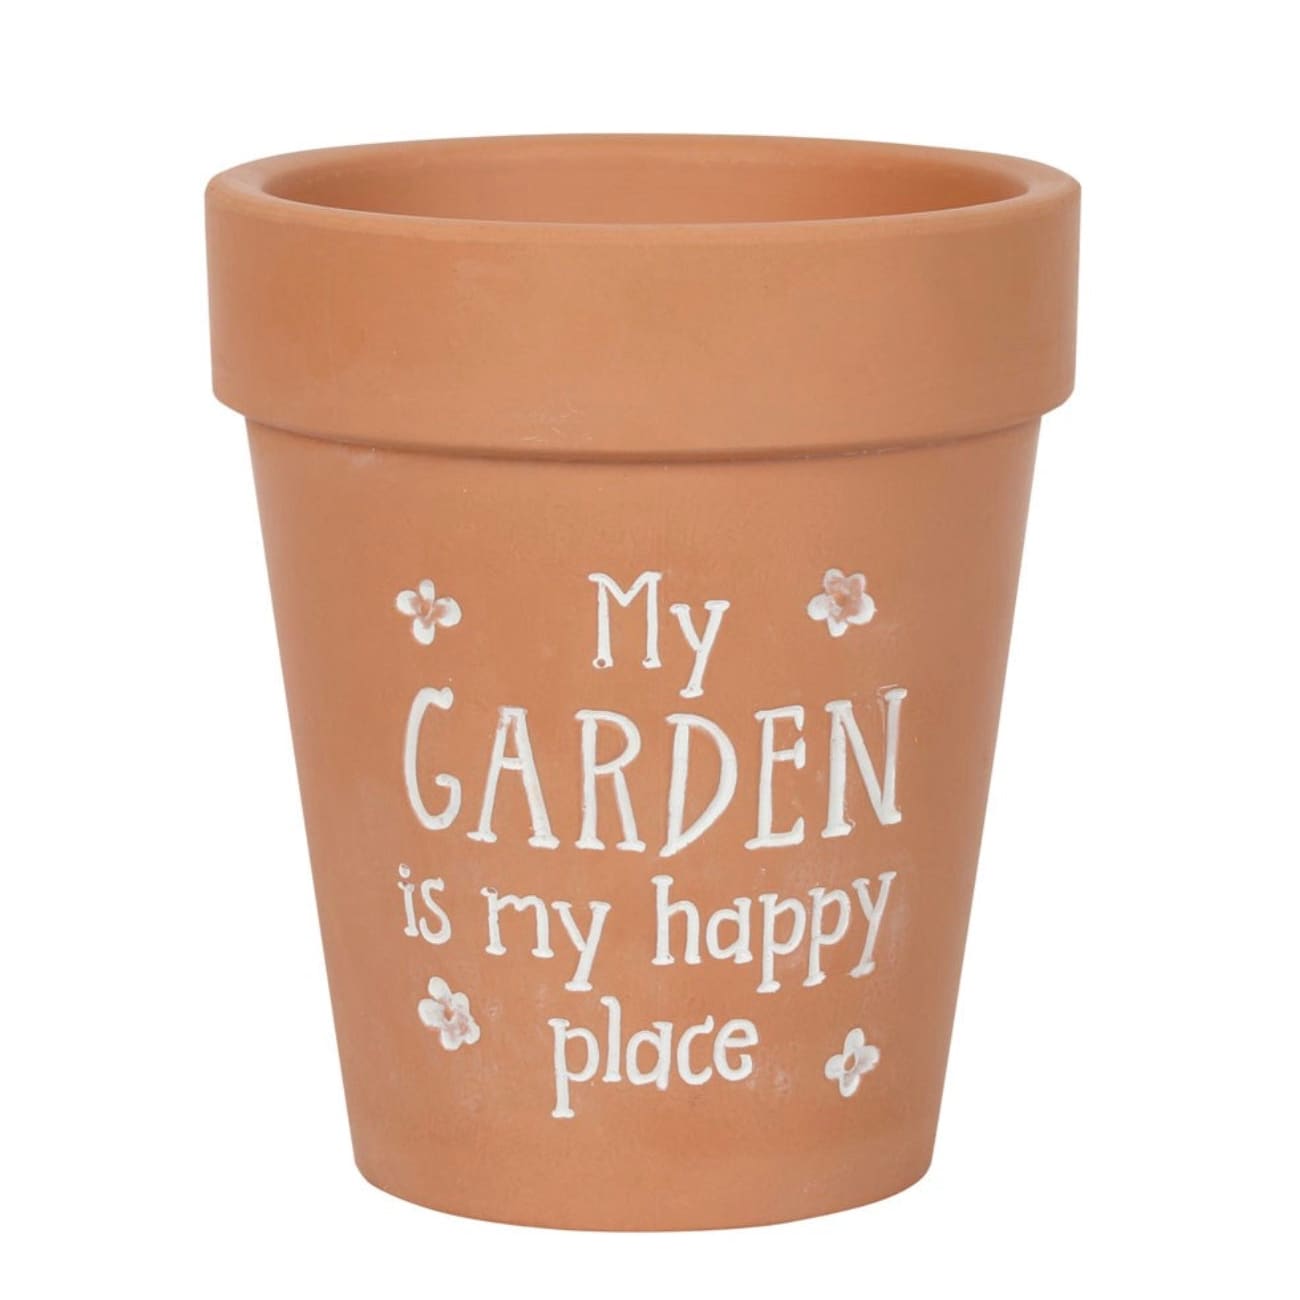 MY GARDEN IS MY HAPPY PLACE TERRACOTTA PLANT POT My Garden